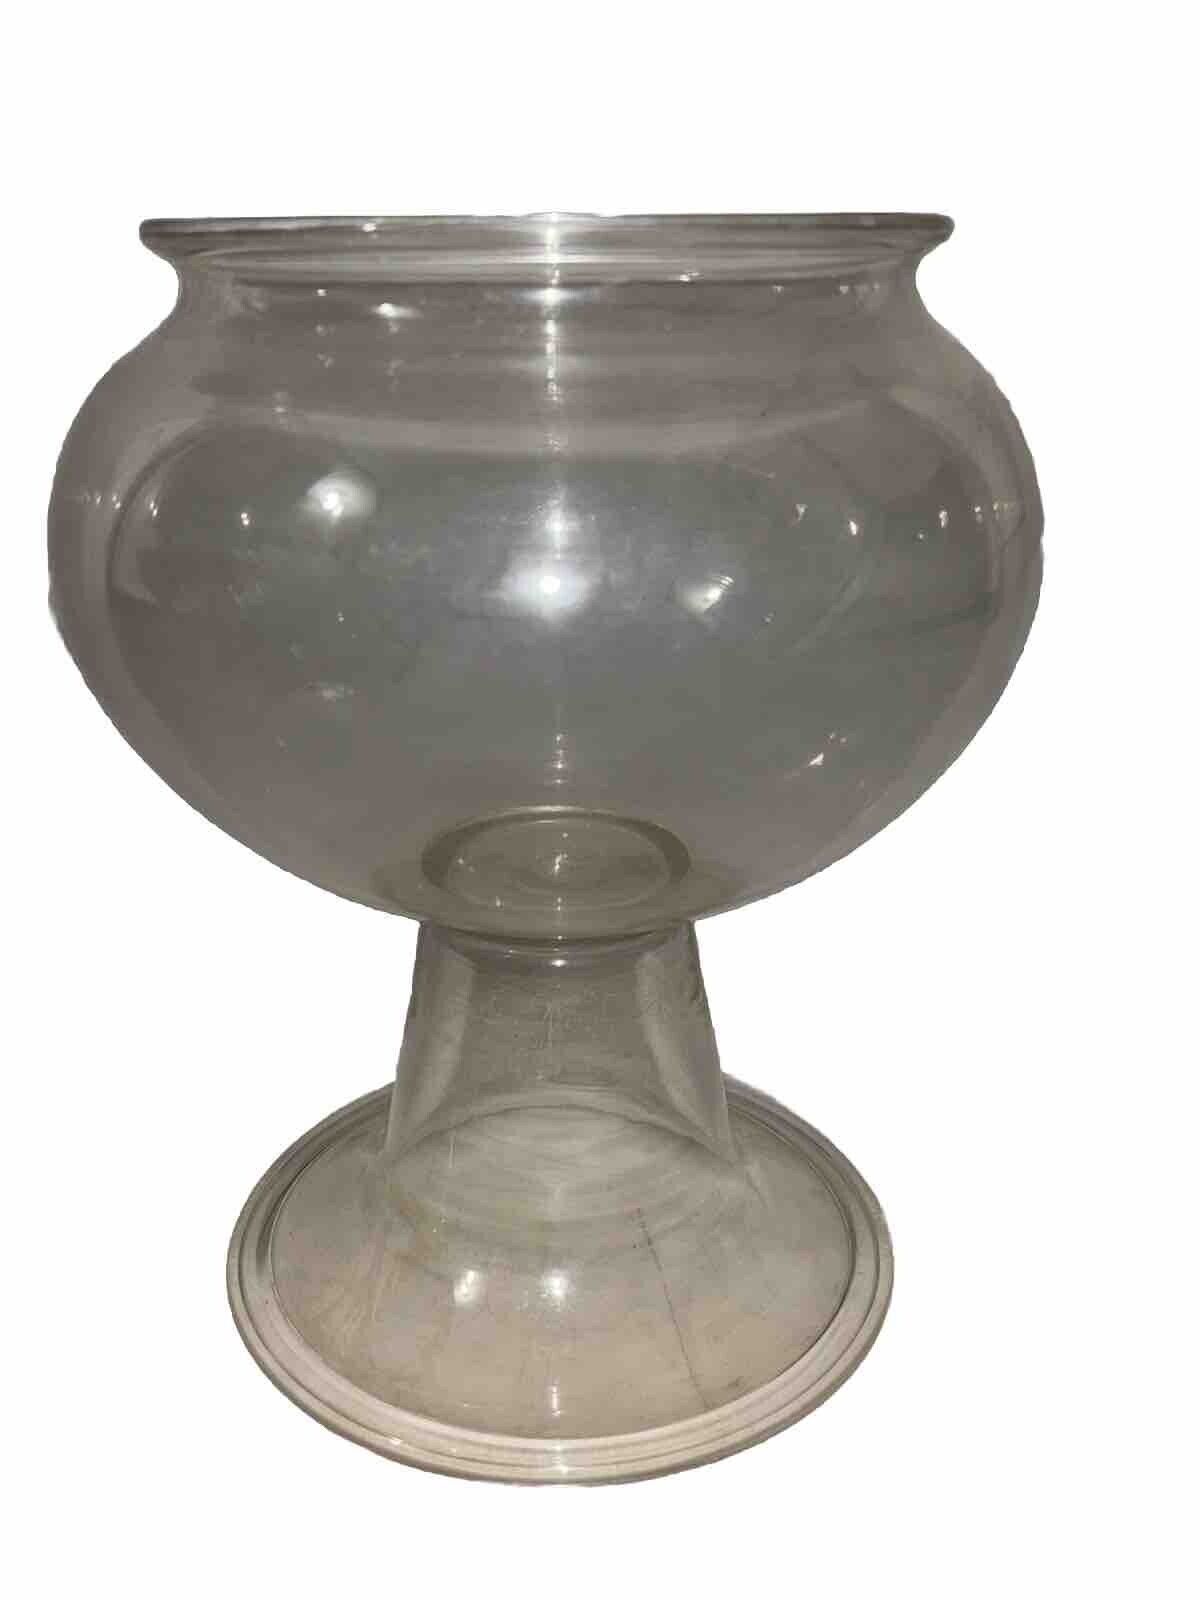 CA 1800s Antique Victorian Pedestal Fishbowl Tank Hand Blown Glass Art Deco